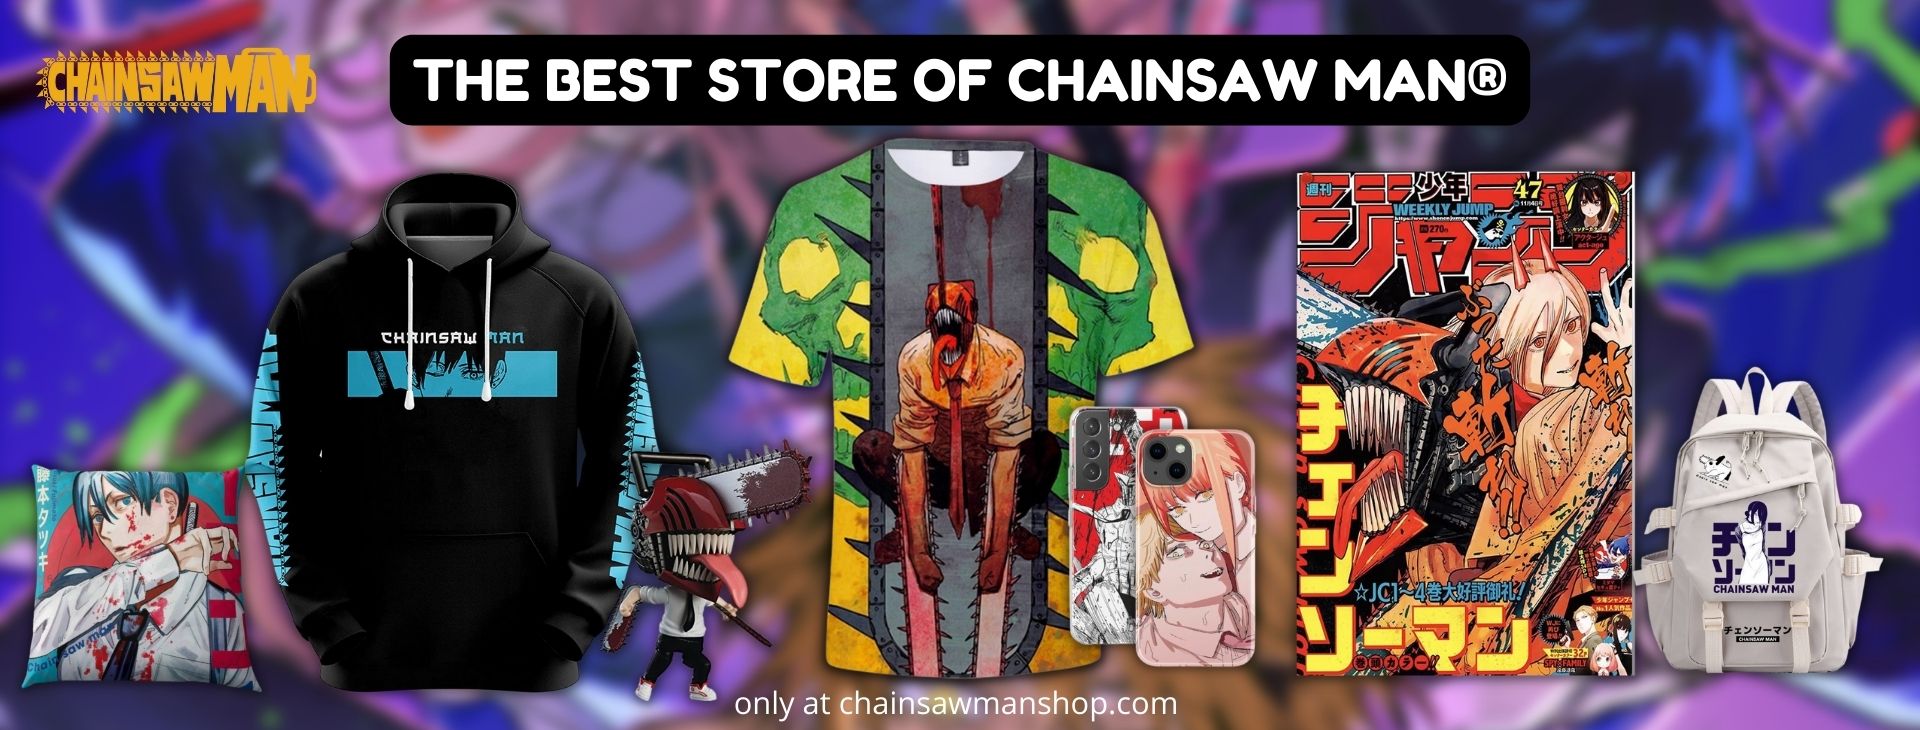 Chainsaw man wallpaper Bundle (Desktop & Phone) - Mecha Brain's Ko-fi Shop  - Ko-fi ❤️ Where creators get support from fans through donations,  memberships, shop sales and more! The original 'Buy Me